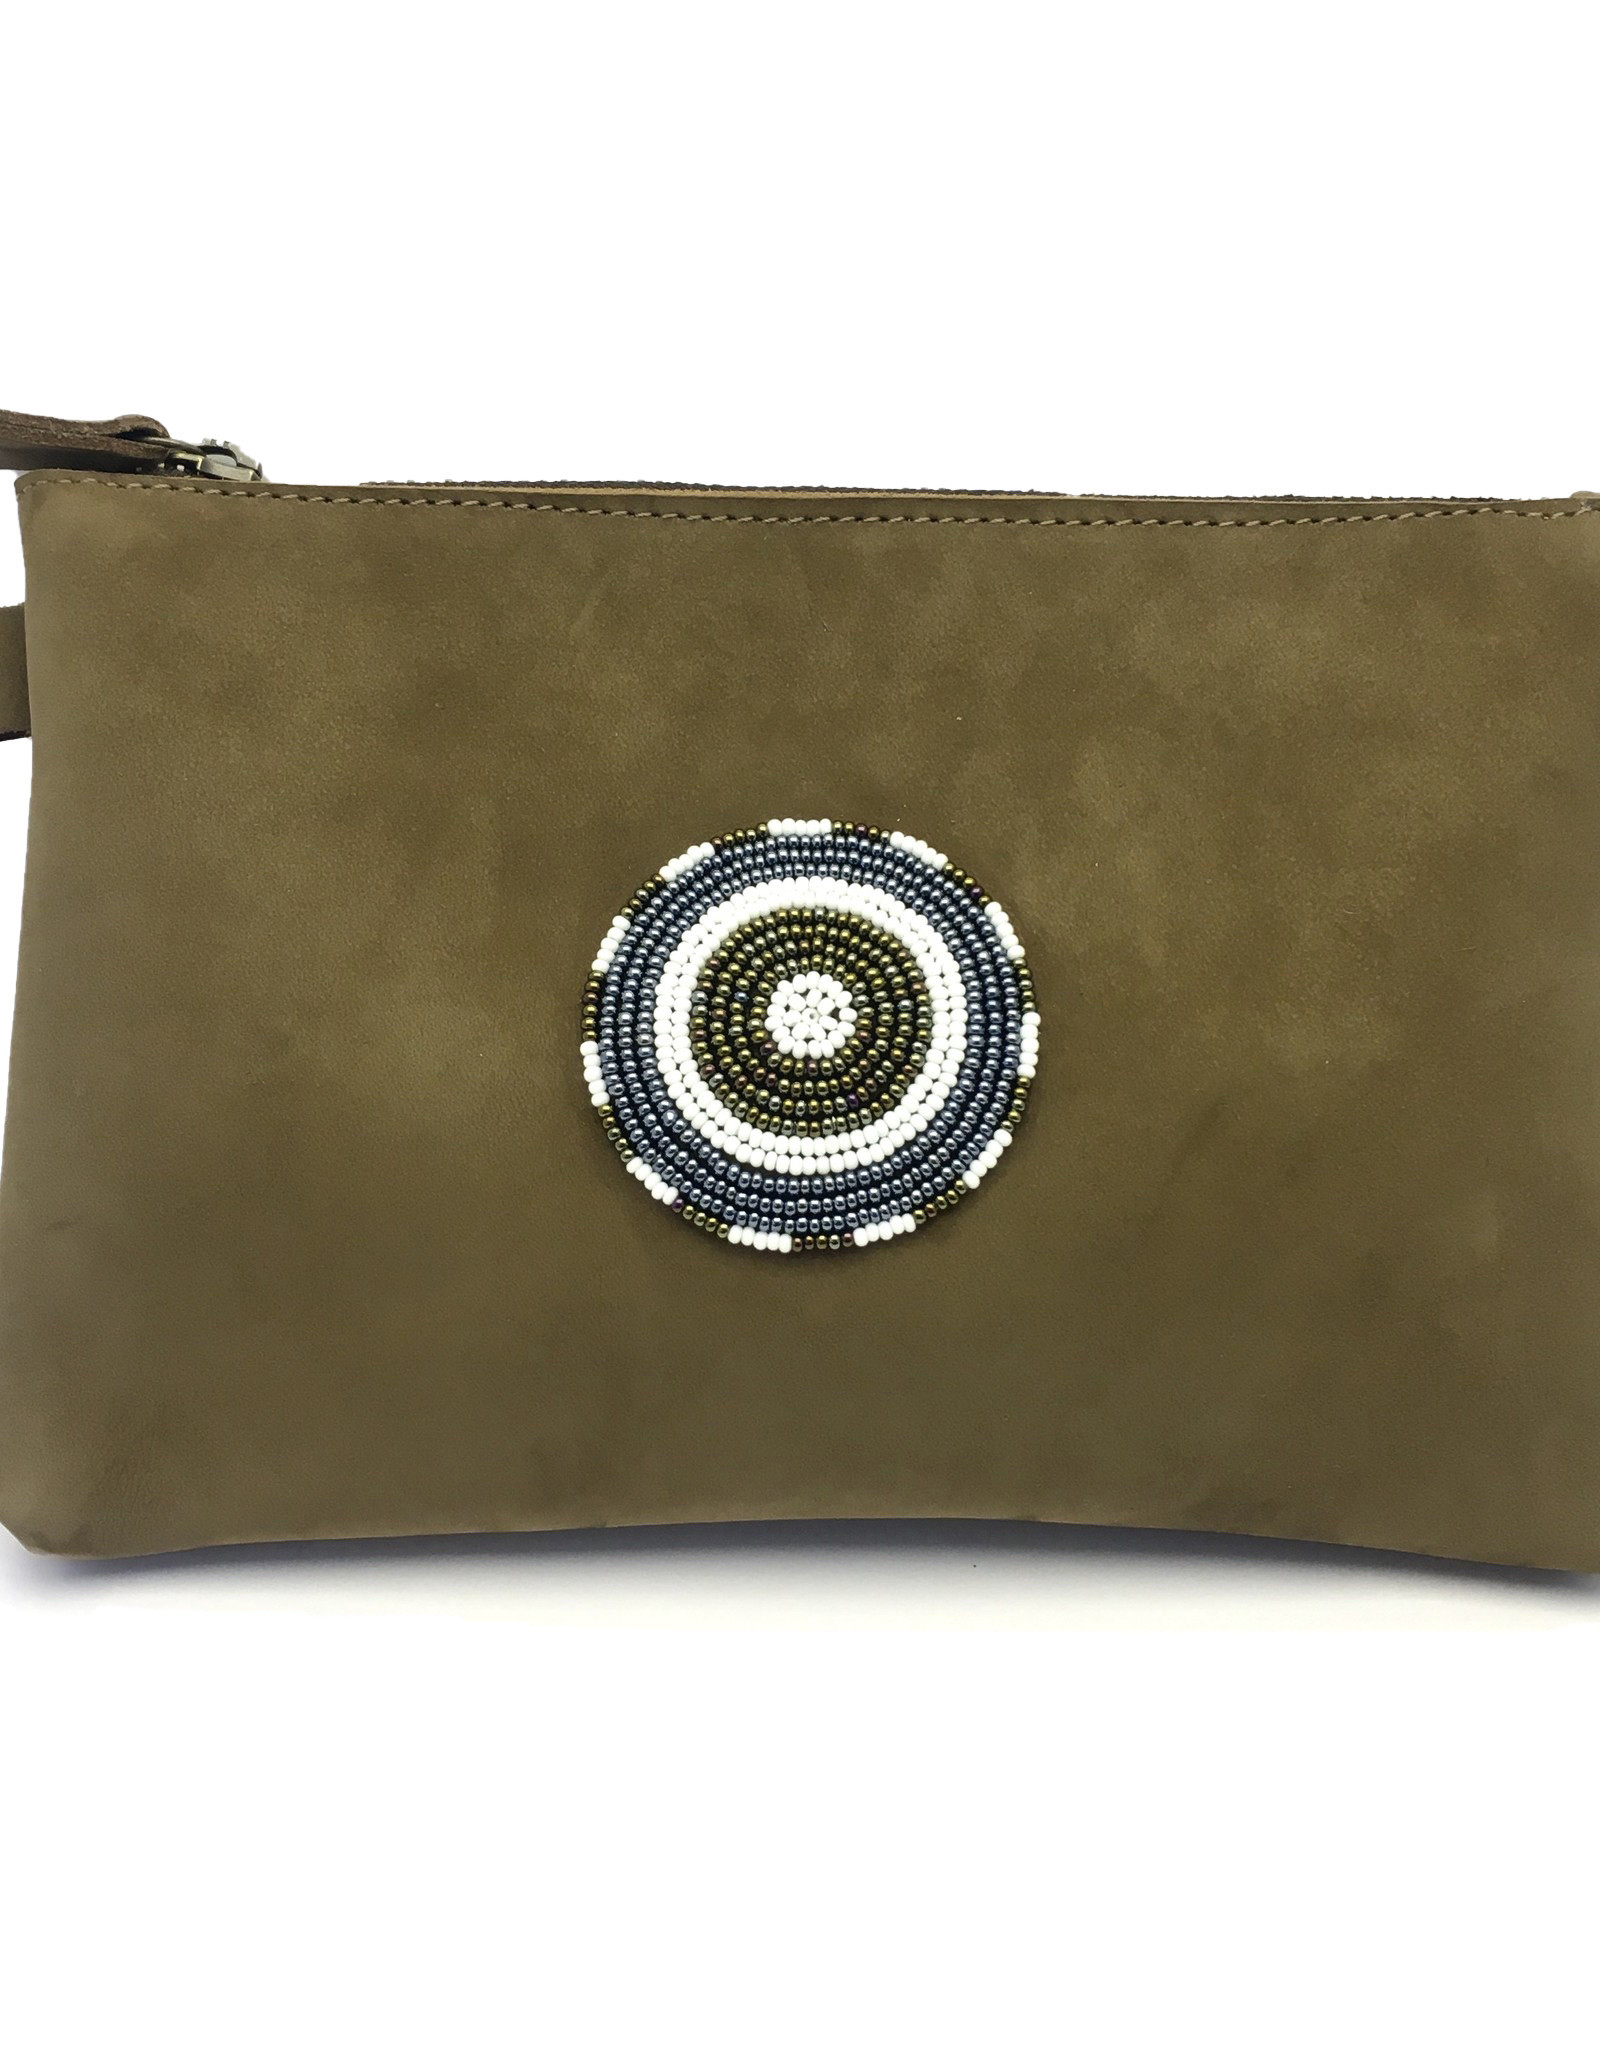 Maisha.Style Maisha purse - tan suede leather purse with tone on tone beads